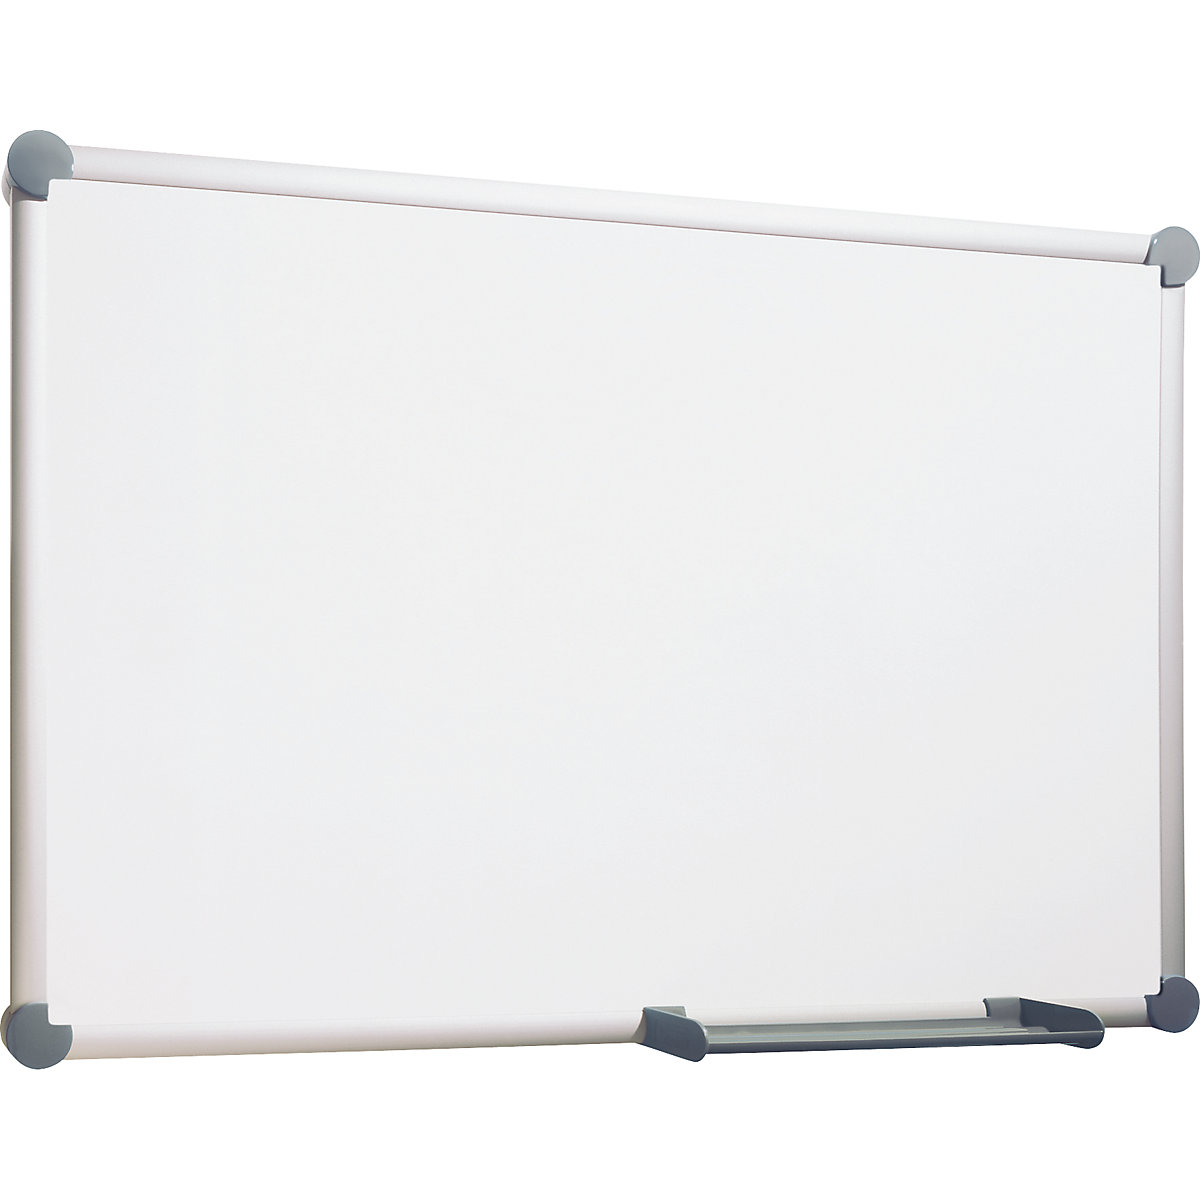 MAUL Whiteboard, Stahlblech, kunststoffbeschichtet, BxH 600 x 450 mm